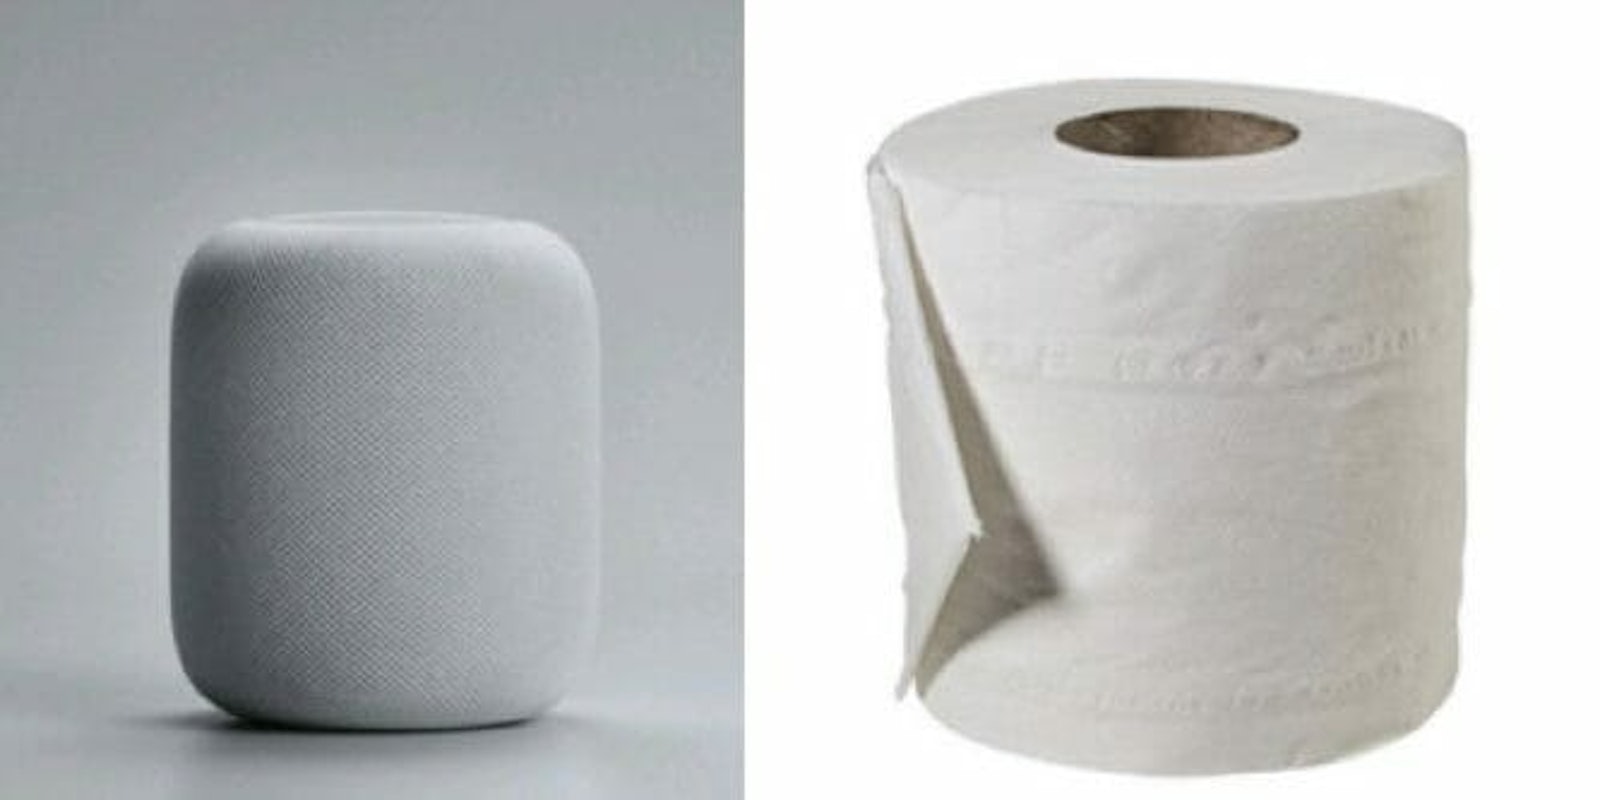 apple homepod looks like toilet paper